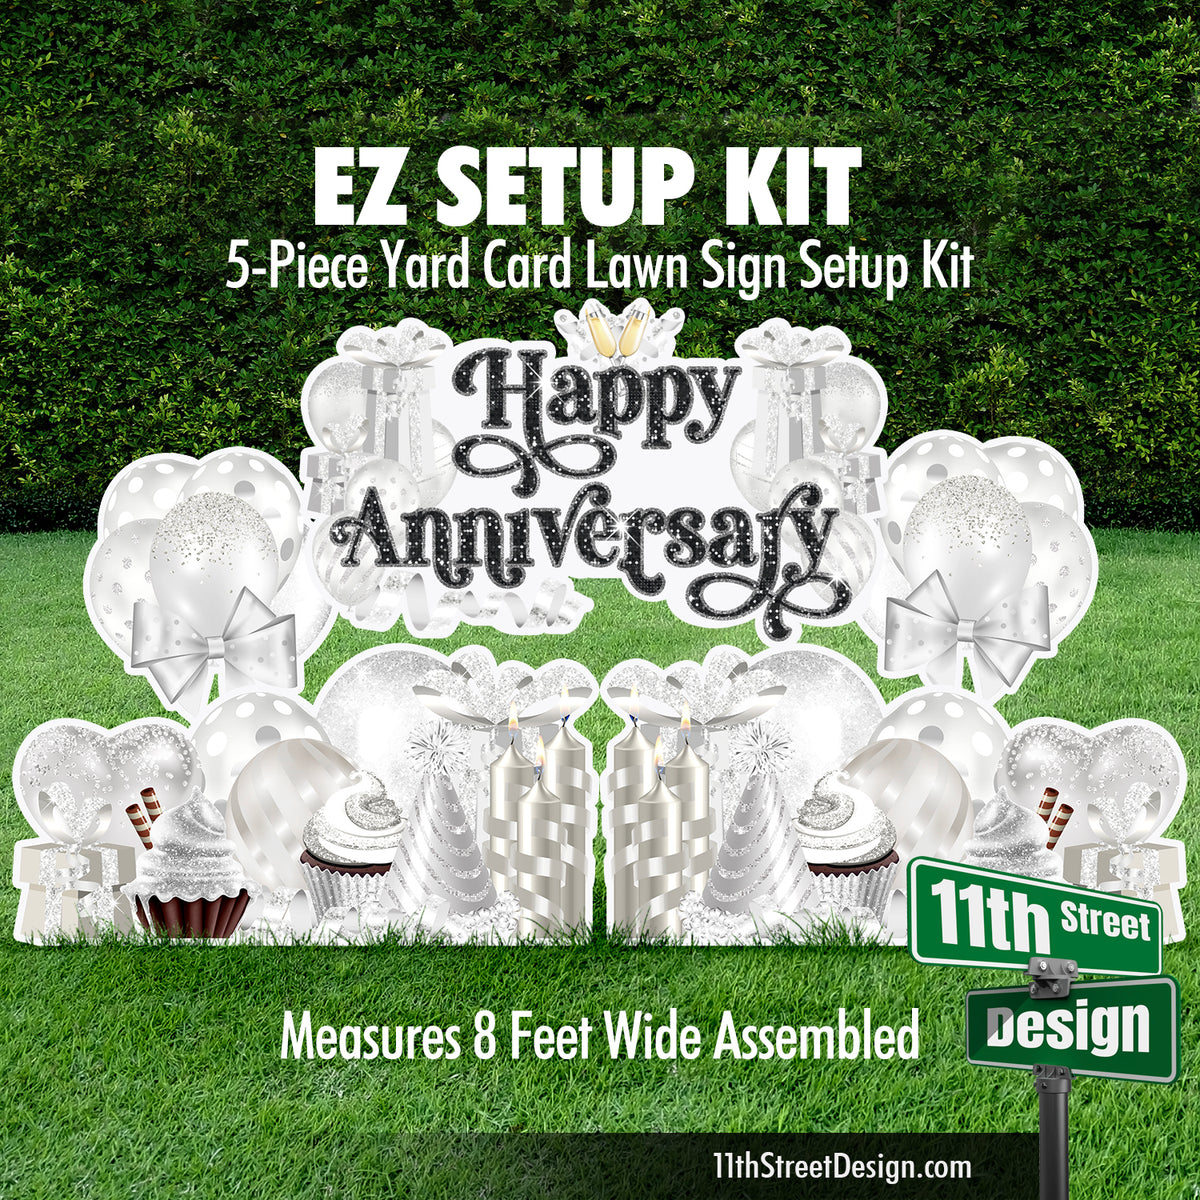 Happy Anniversary EZ Setup Kit White - Yard Card Lawn Decorations